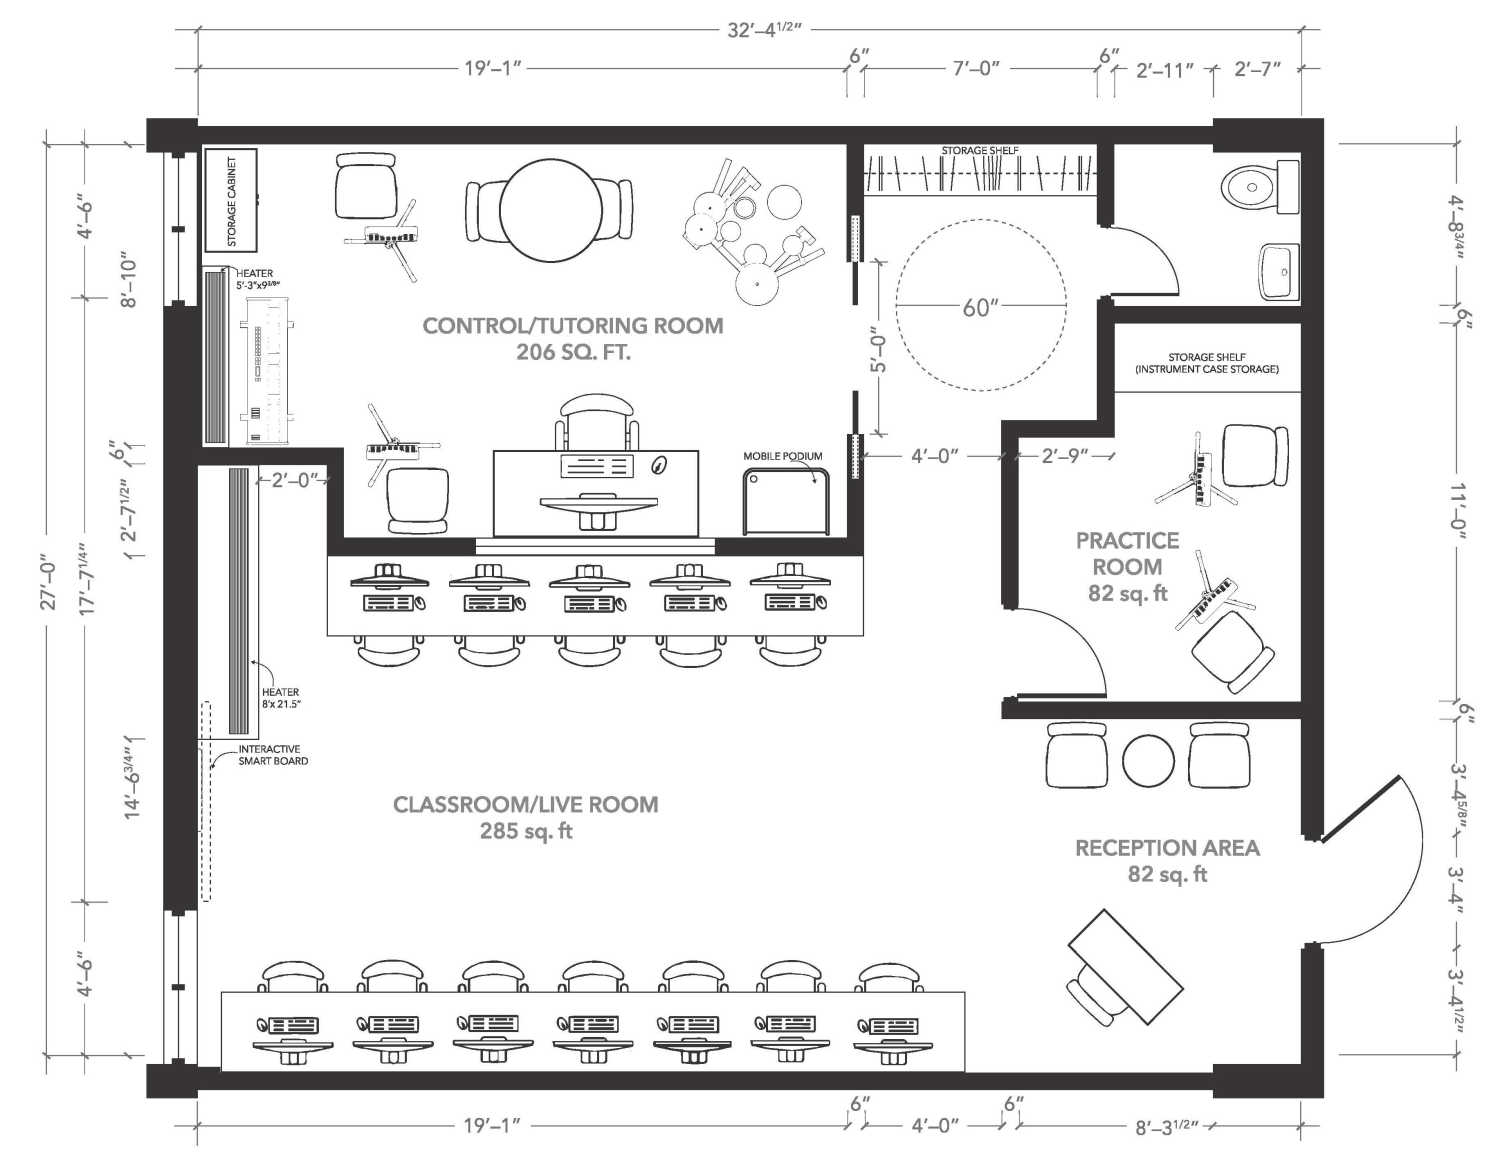 Final floor plan of Harmony space.